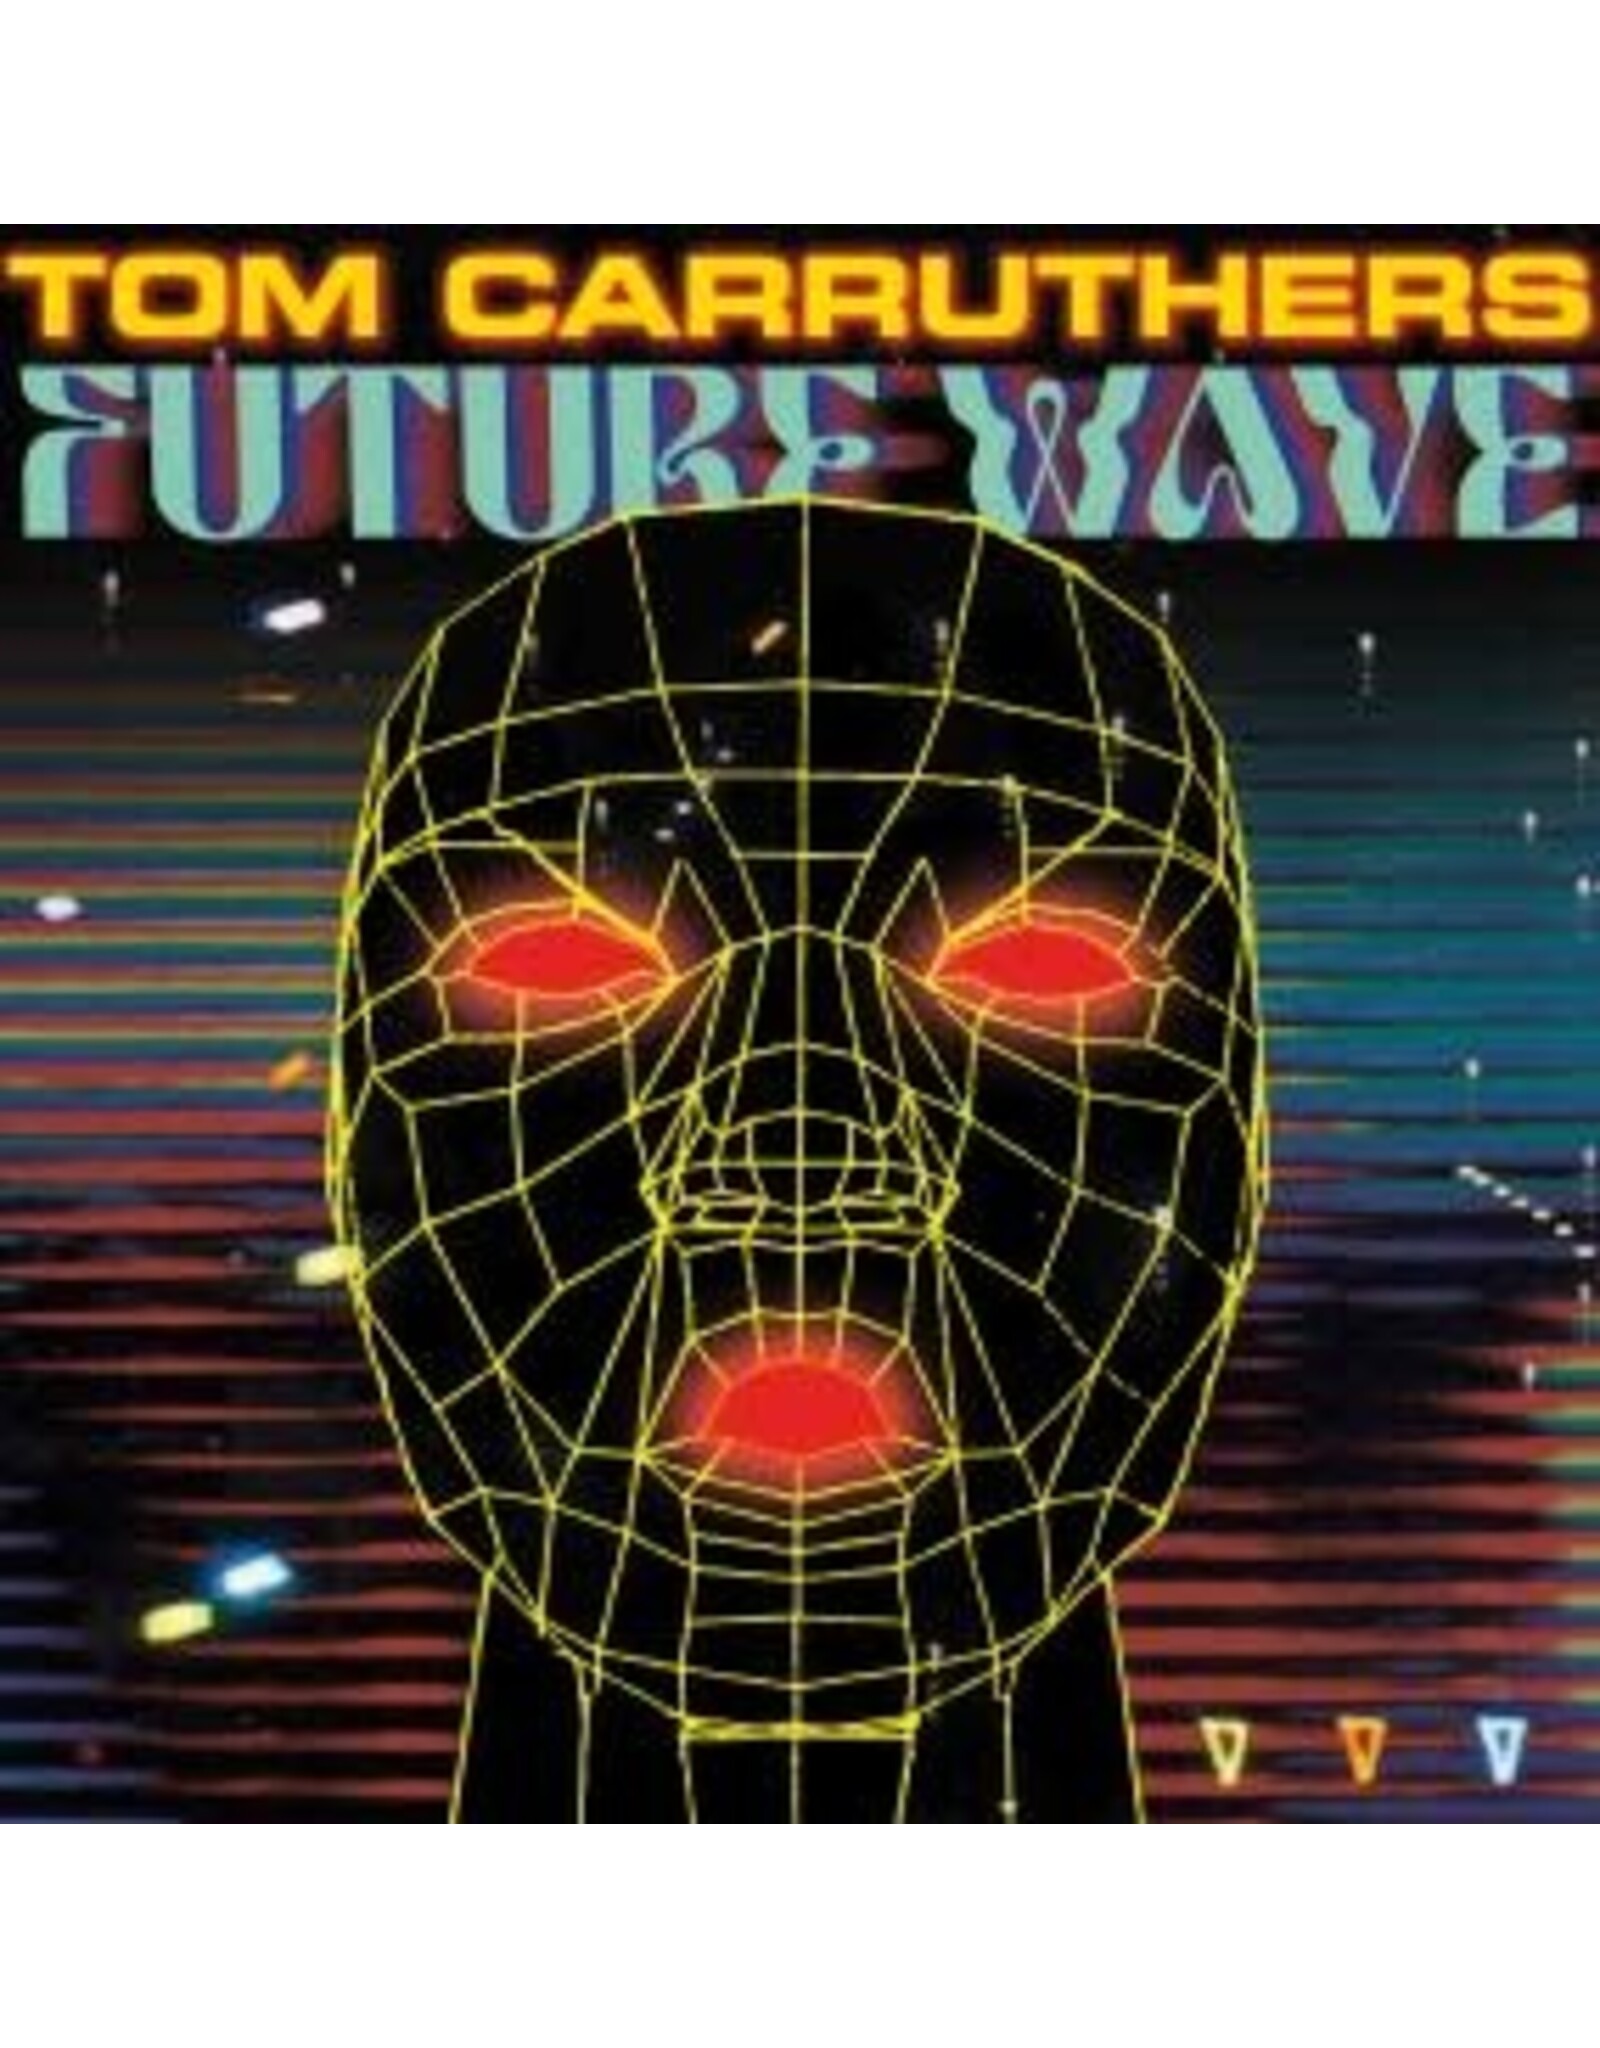 L.I.E.S. Carruthers, Tom: Future Wave LP